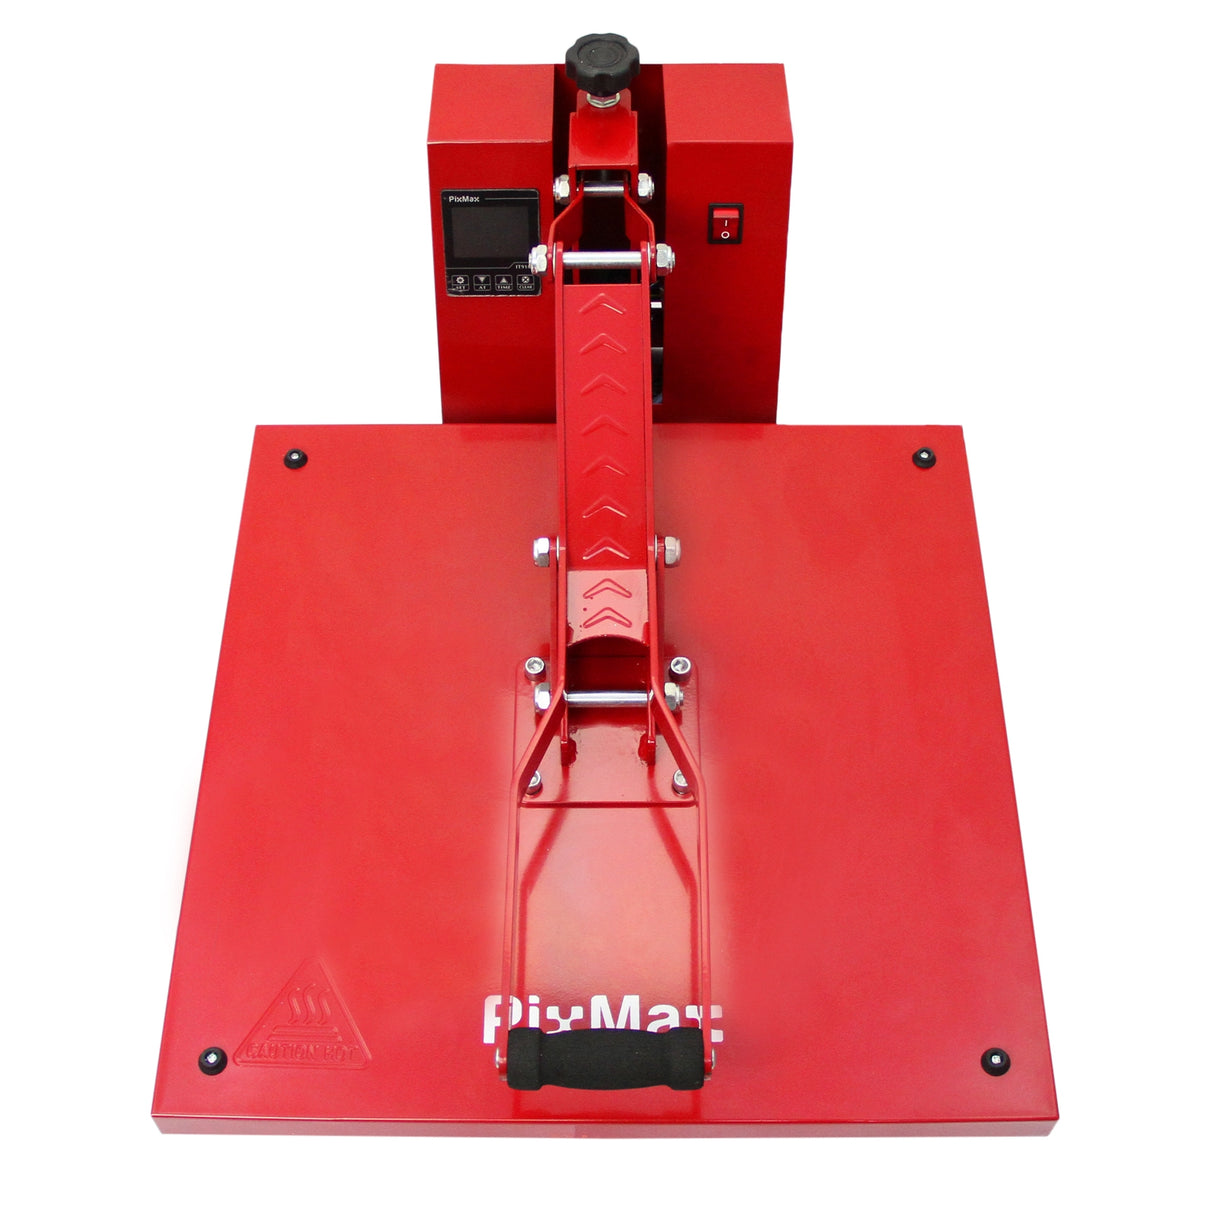 50cm Clam Heat Press & Epson Printer - Like New